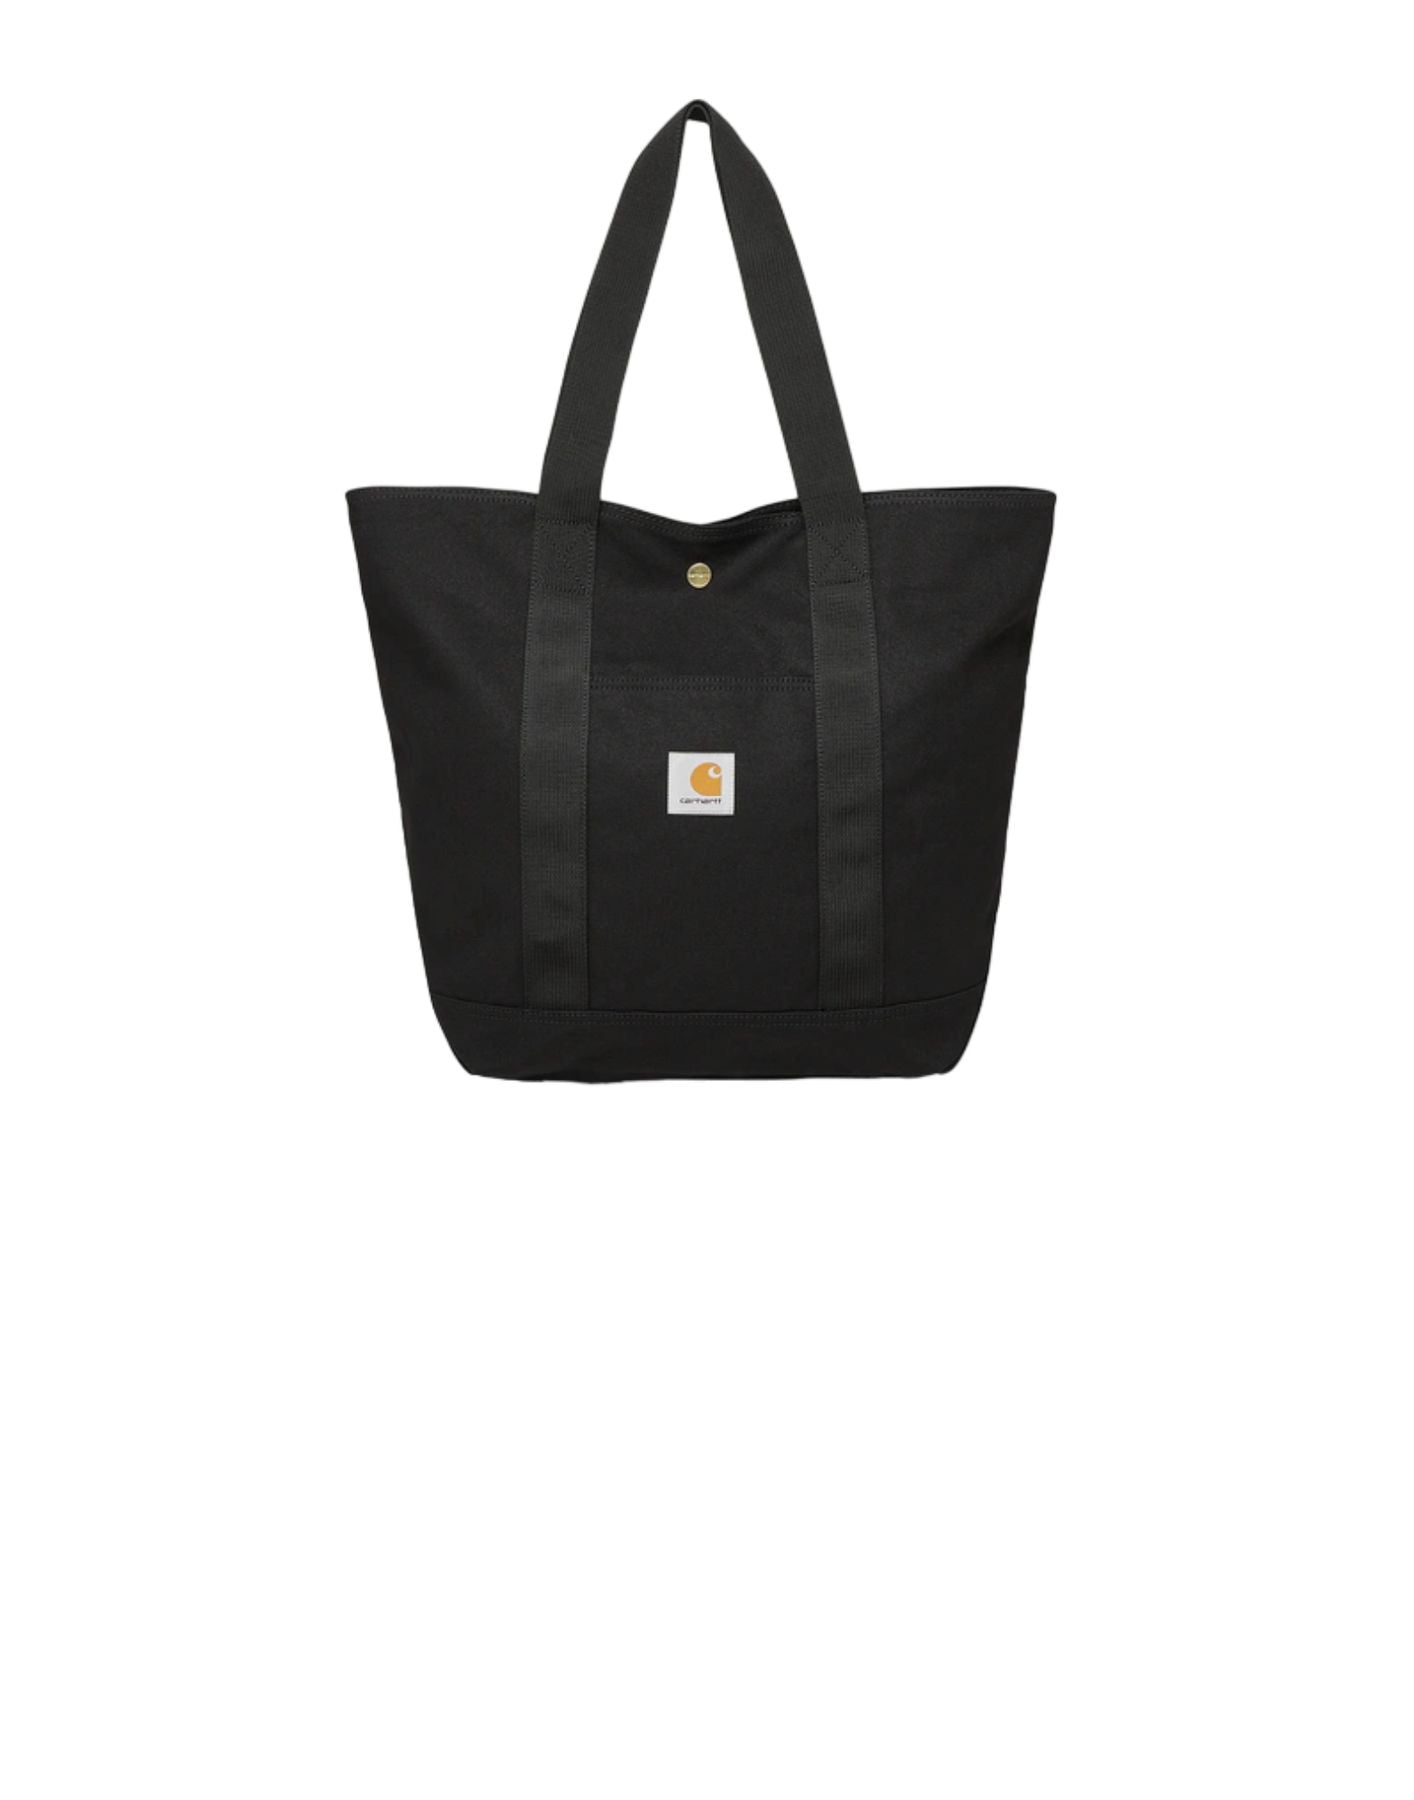 Bag Woman I033102 Black Carhartt Wip